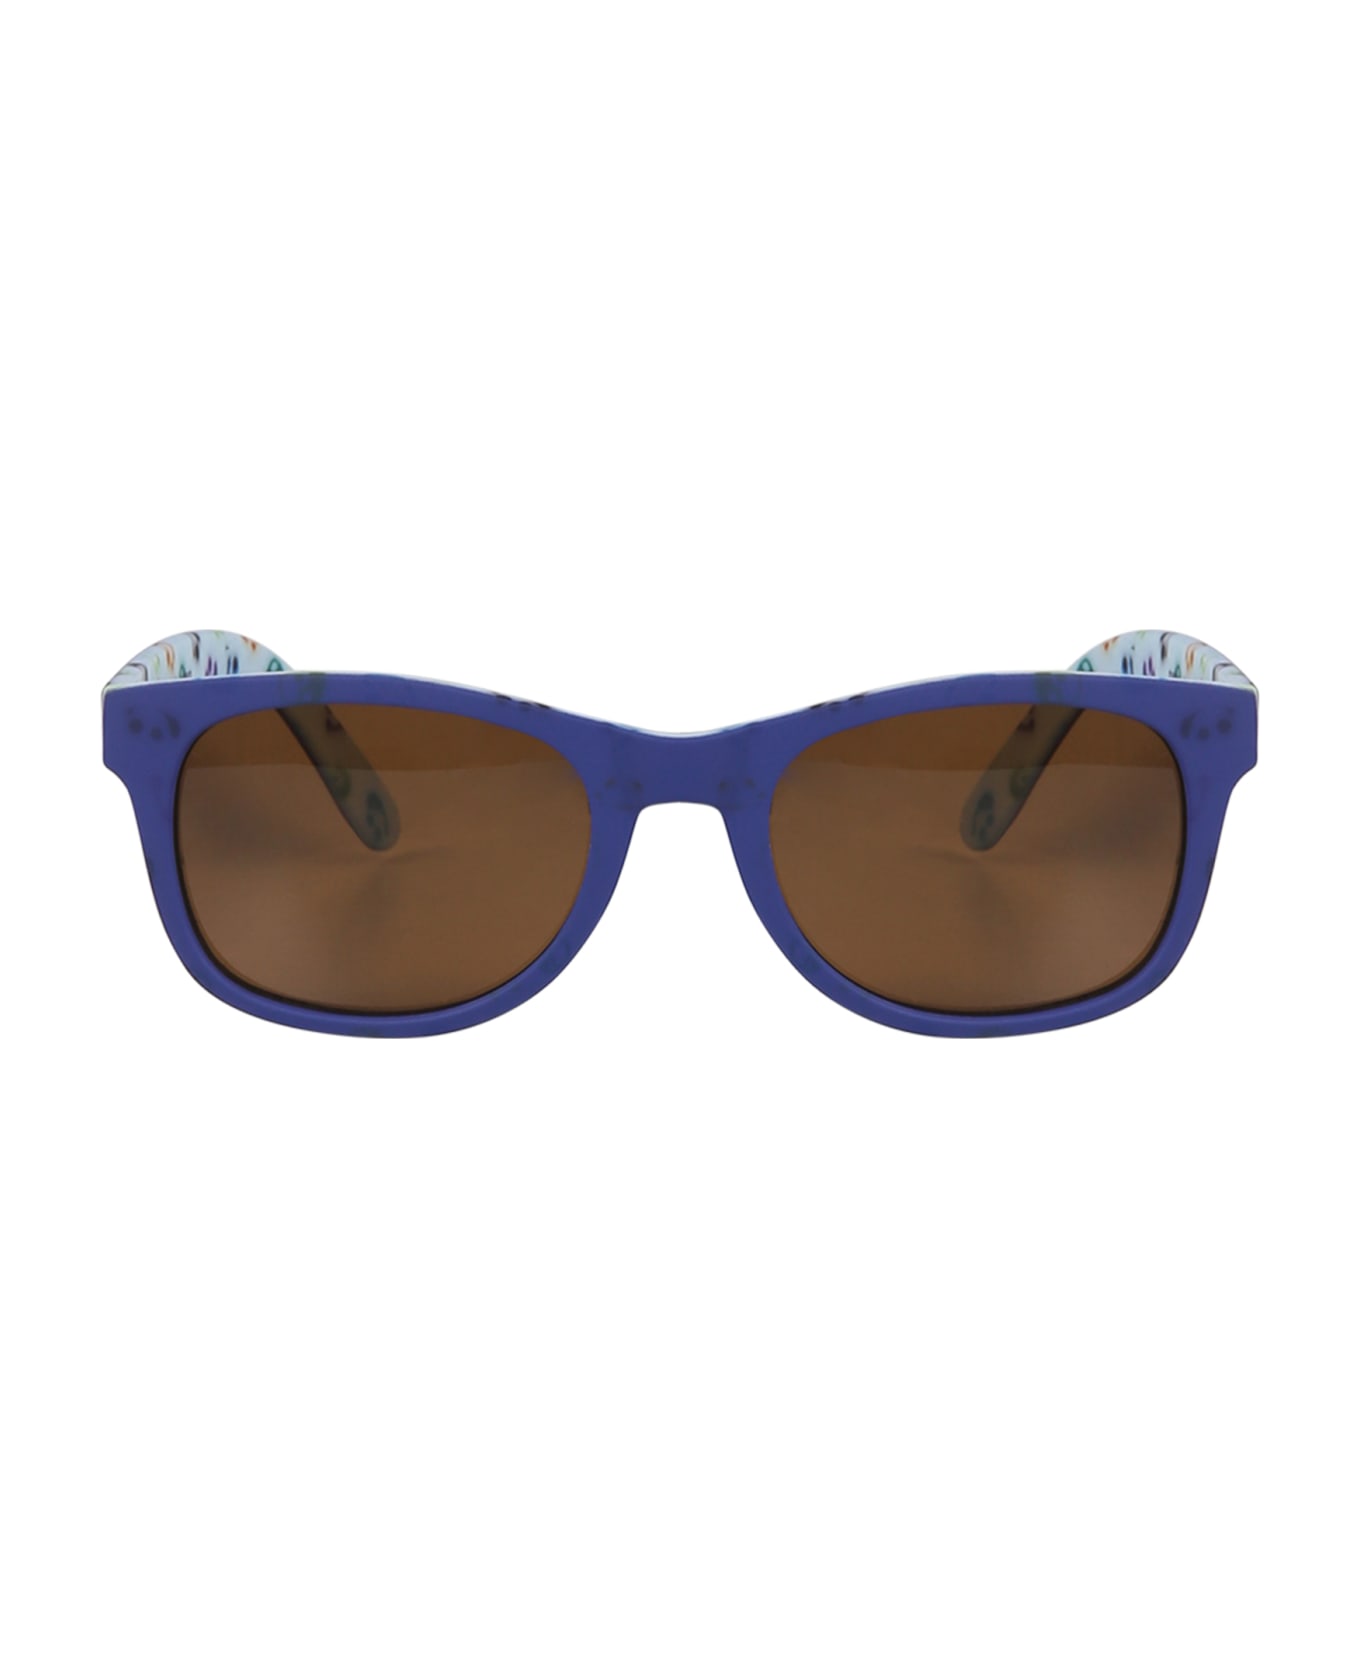 Molo Blue Star Sunglasses For Boy - Blue